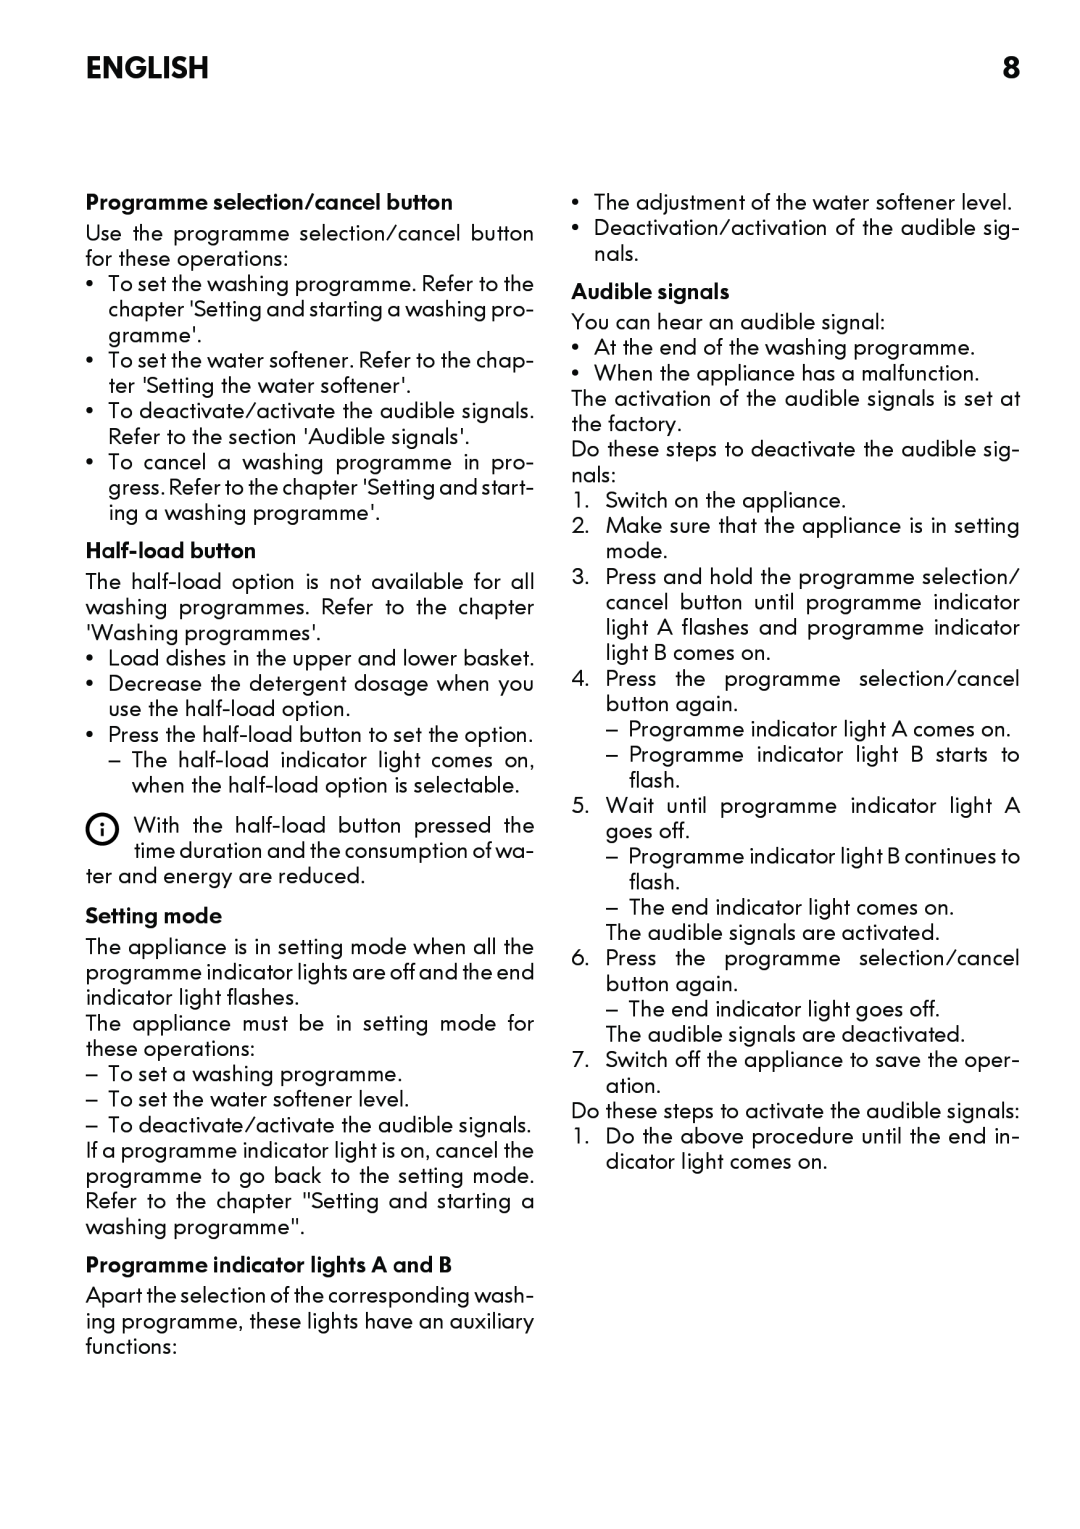 IKEA DW60 manual English, Programme selection/cancel button 